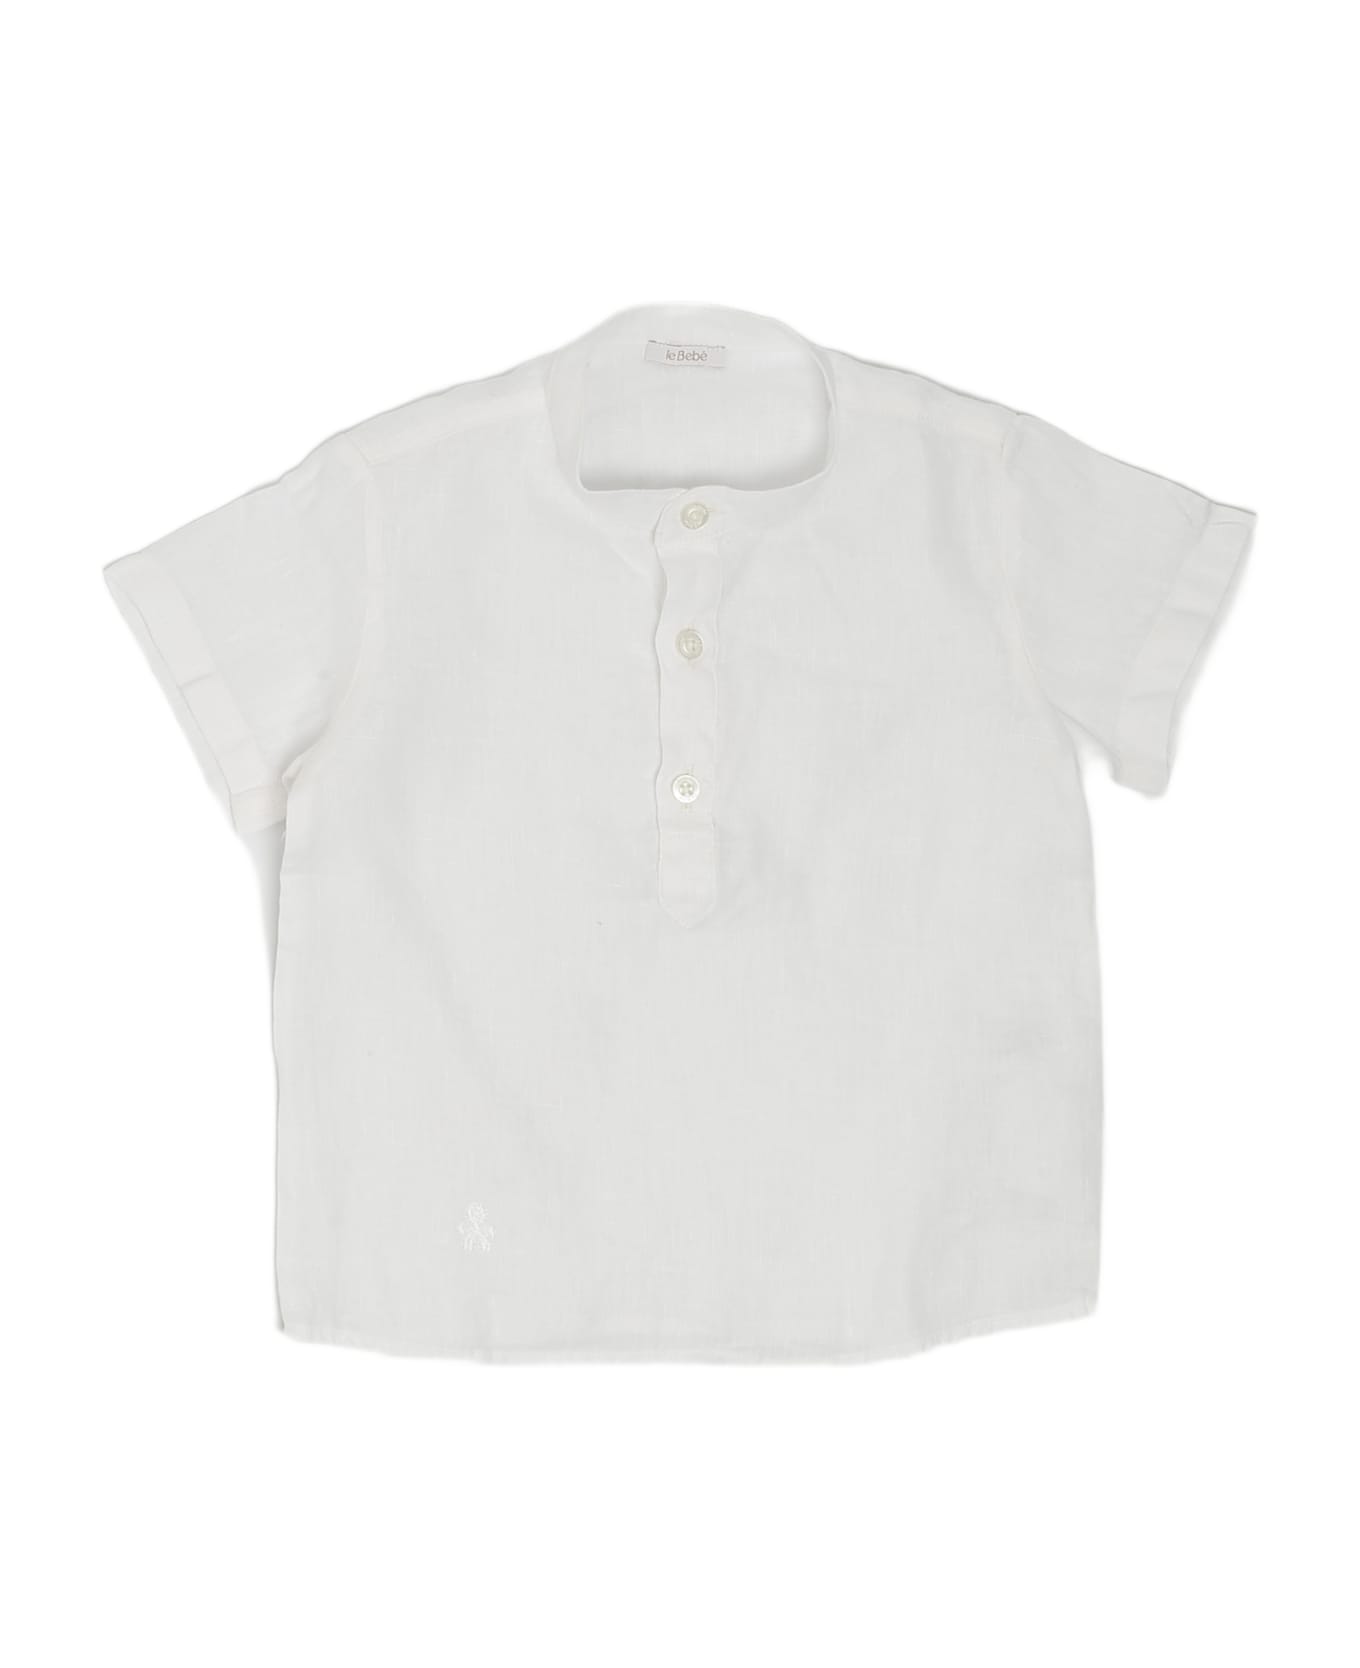 leBebé Shirt Shirt - BIANCO シャツ